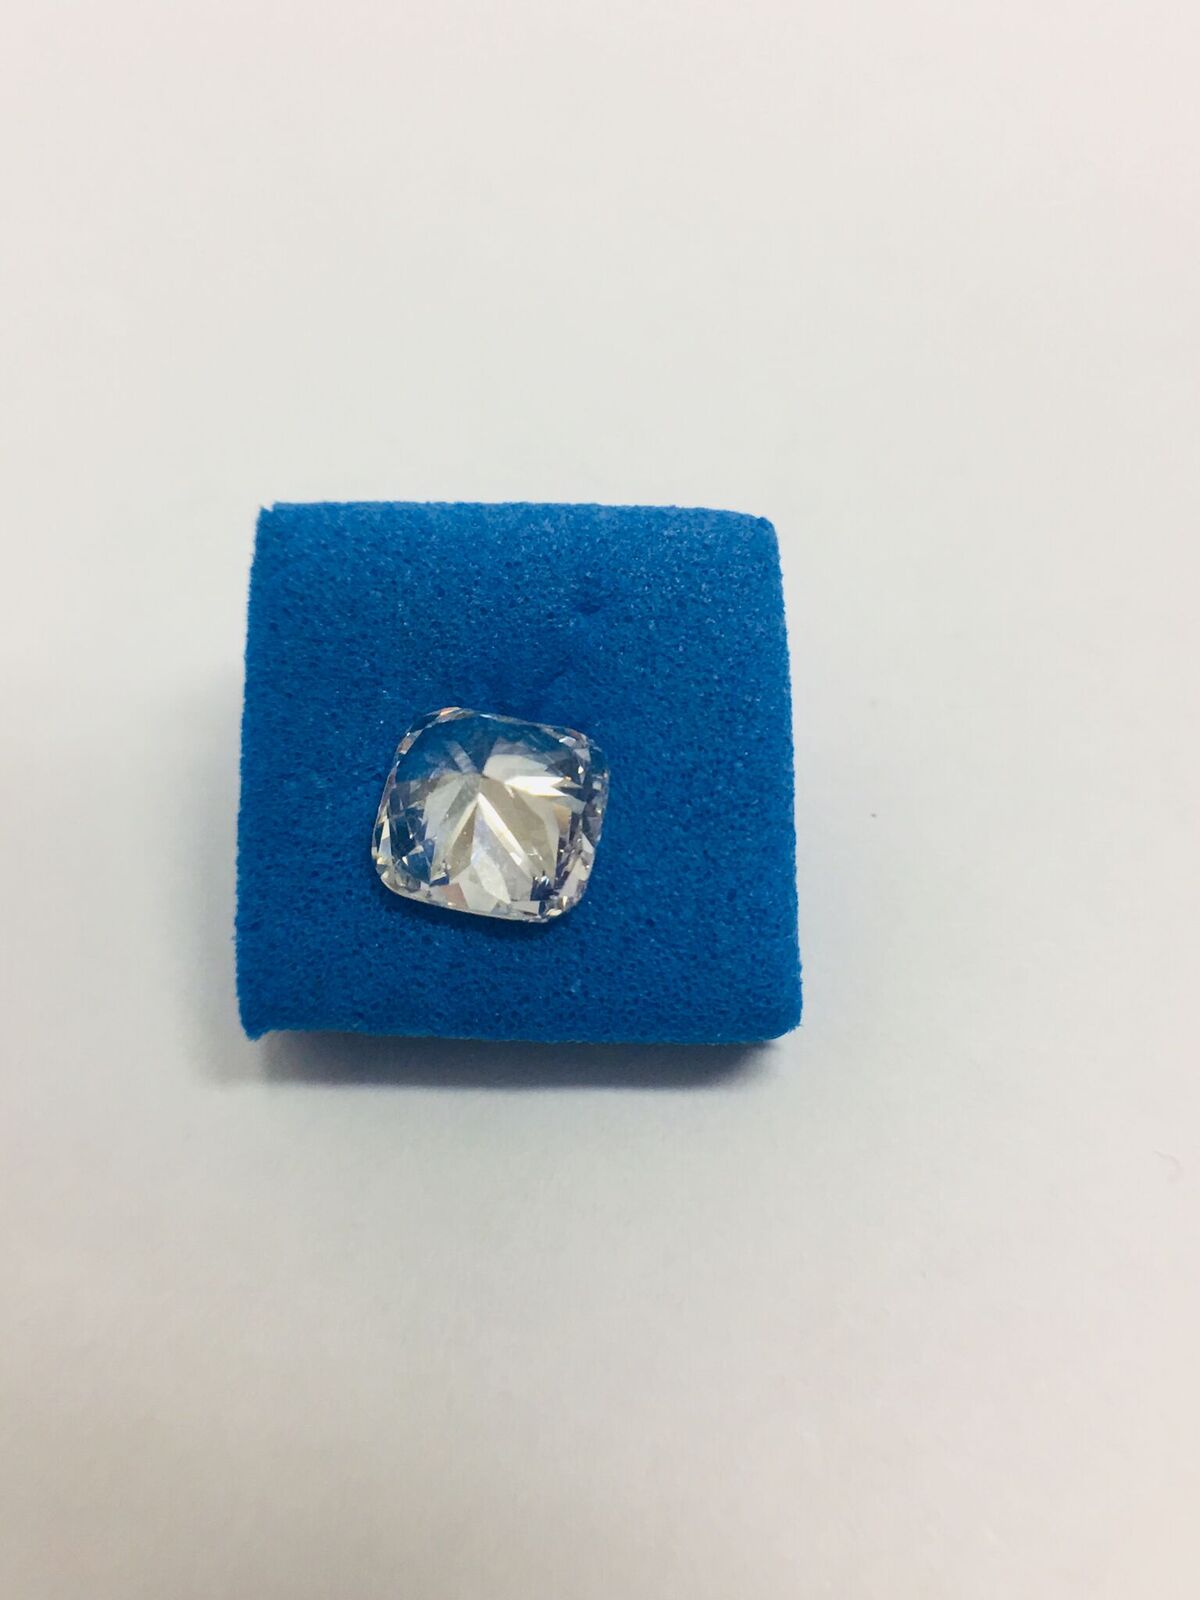 1.00ct cushion cut natural diamond - Image 10 of 14